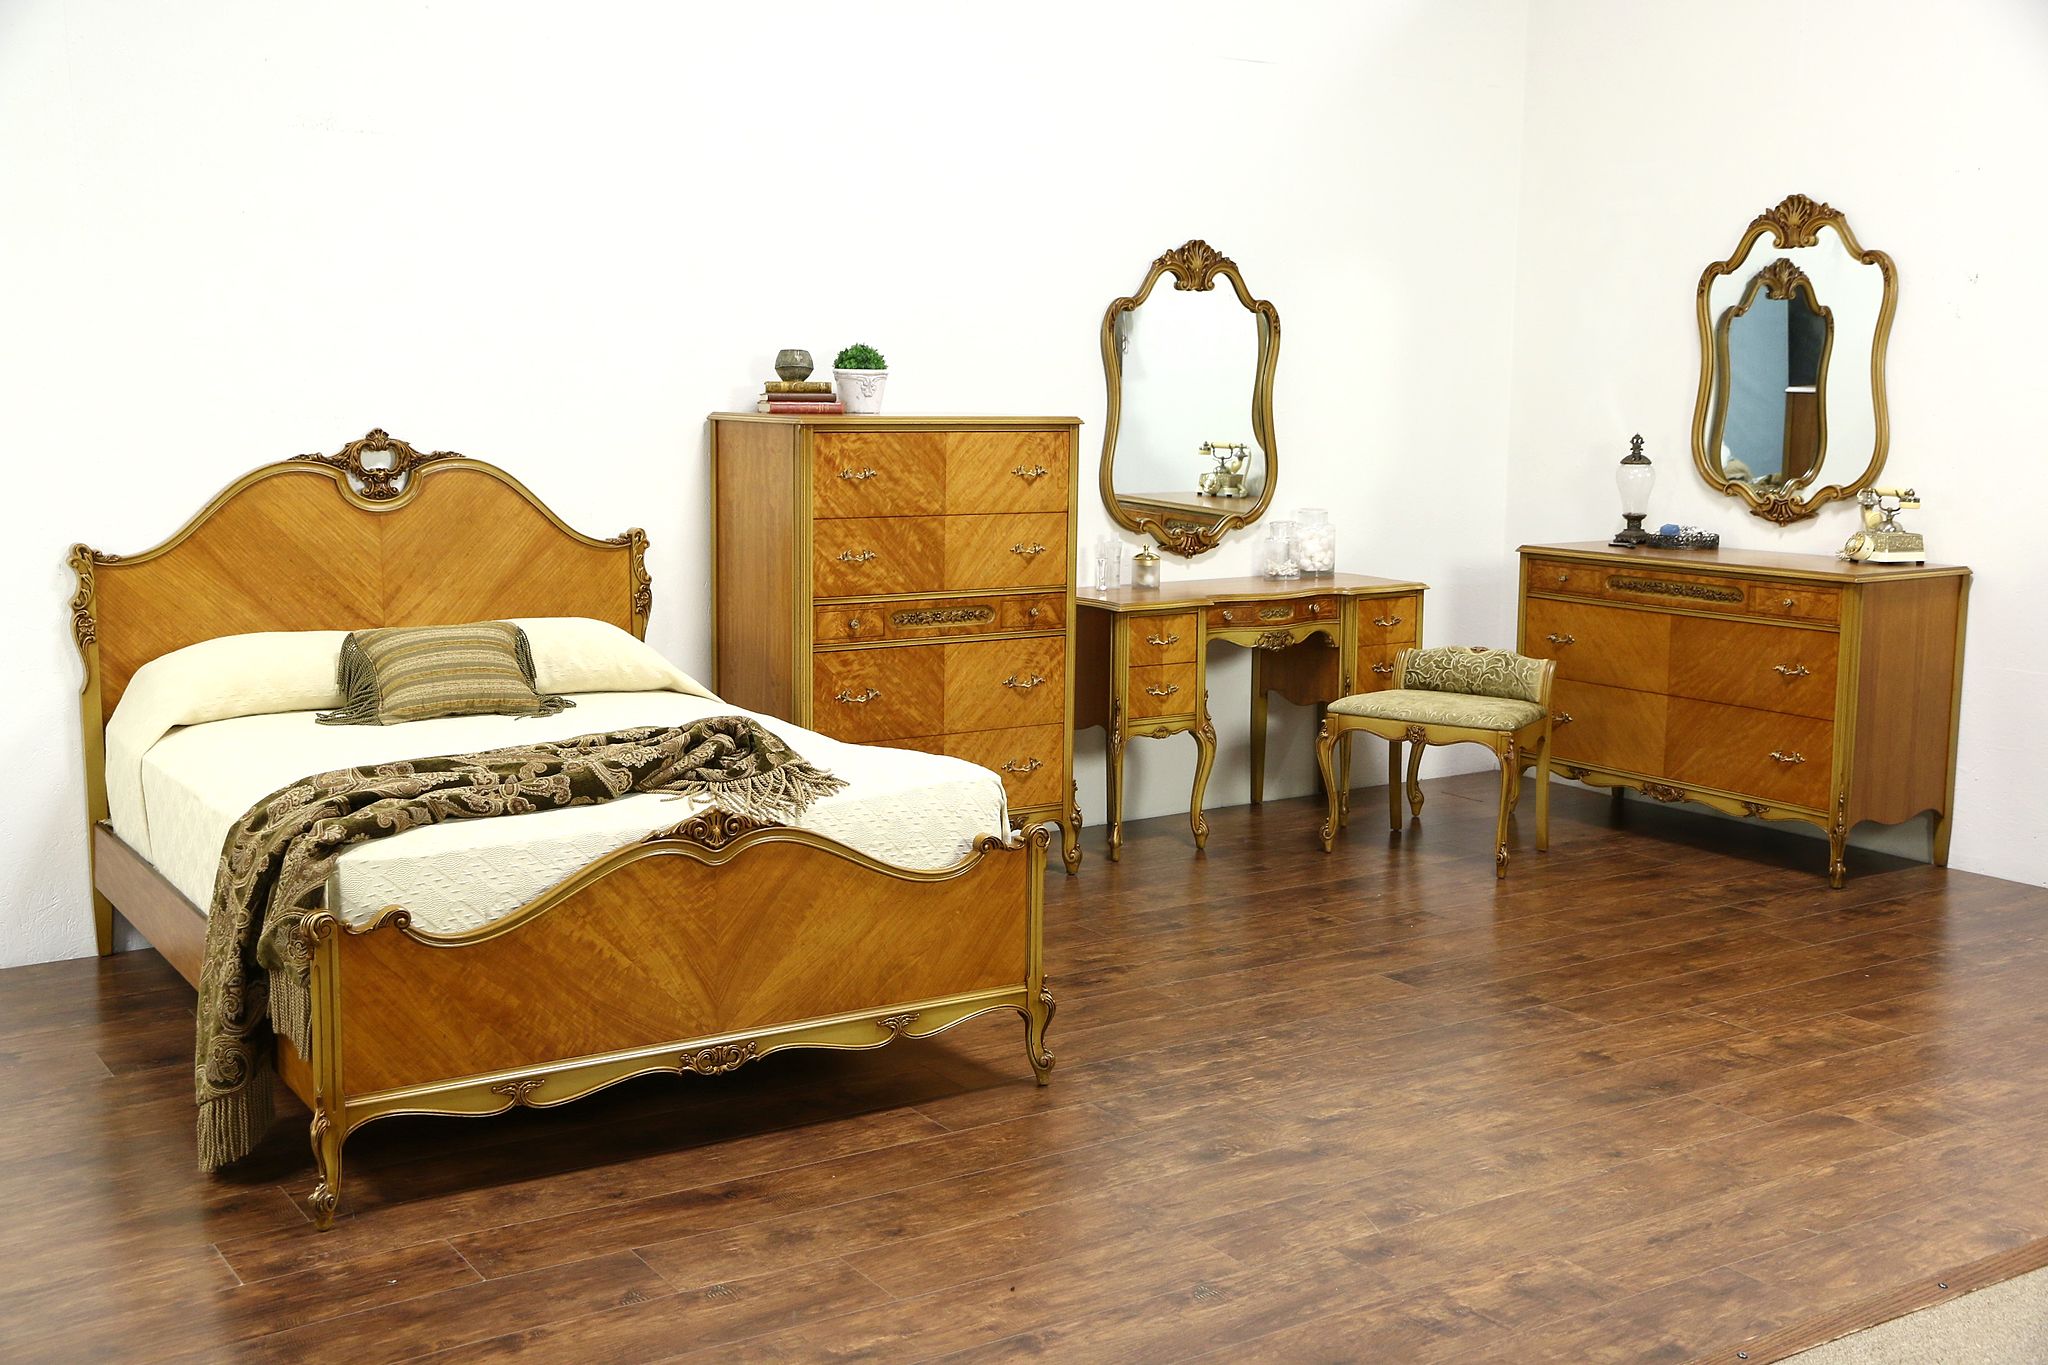 1940s bedroom furniture ramseur